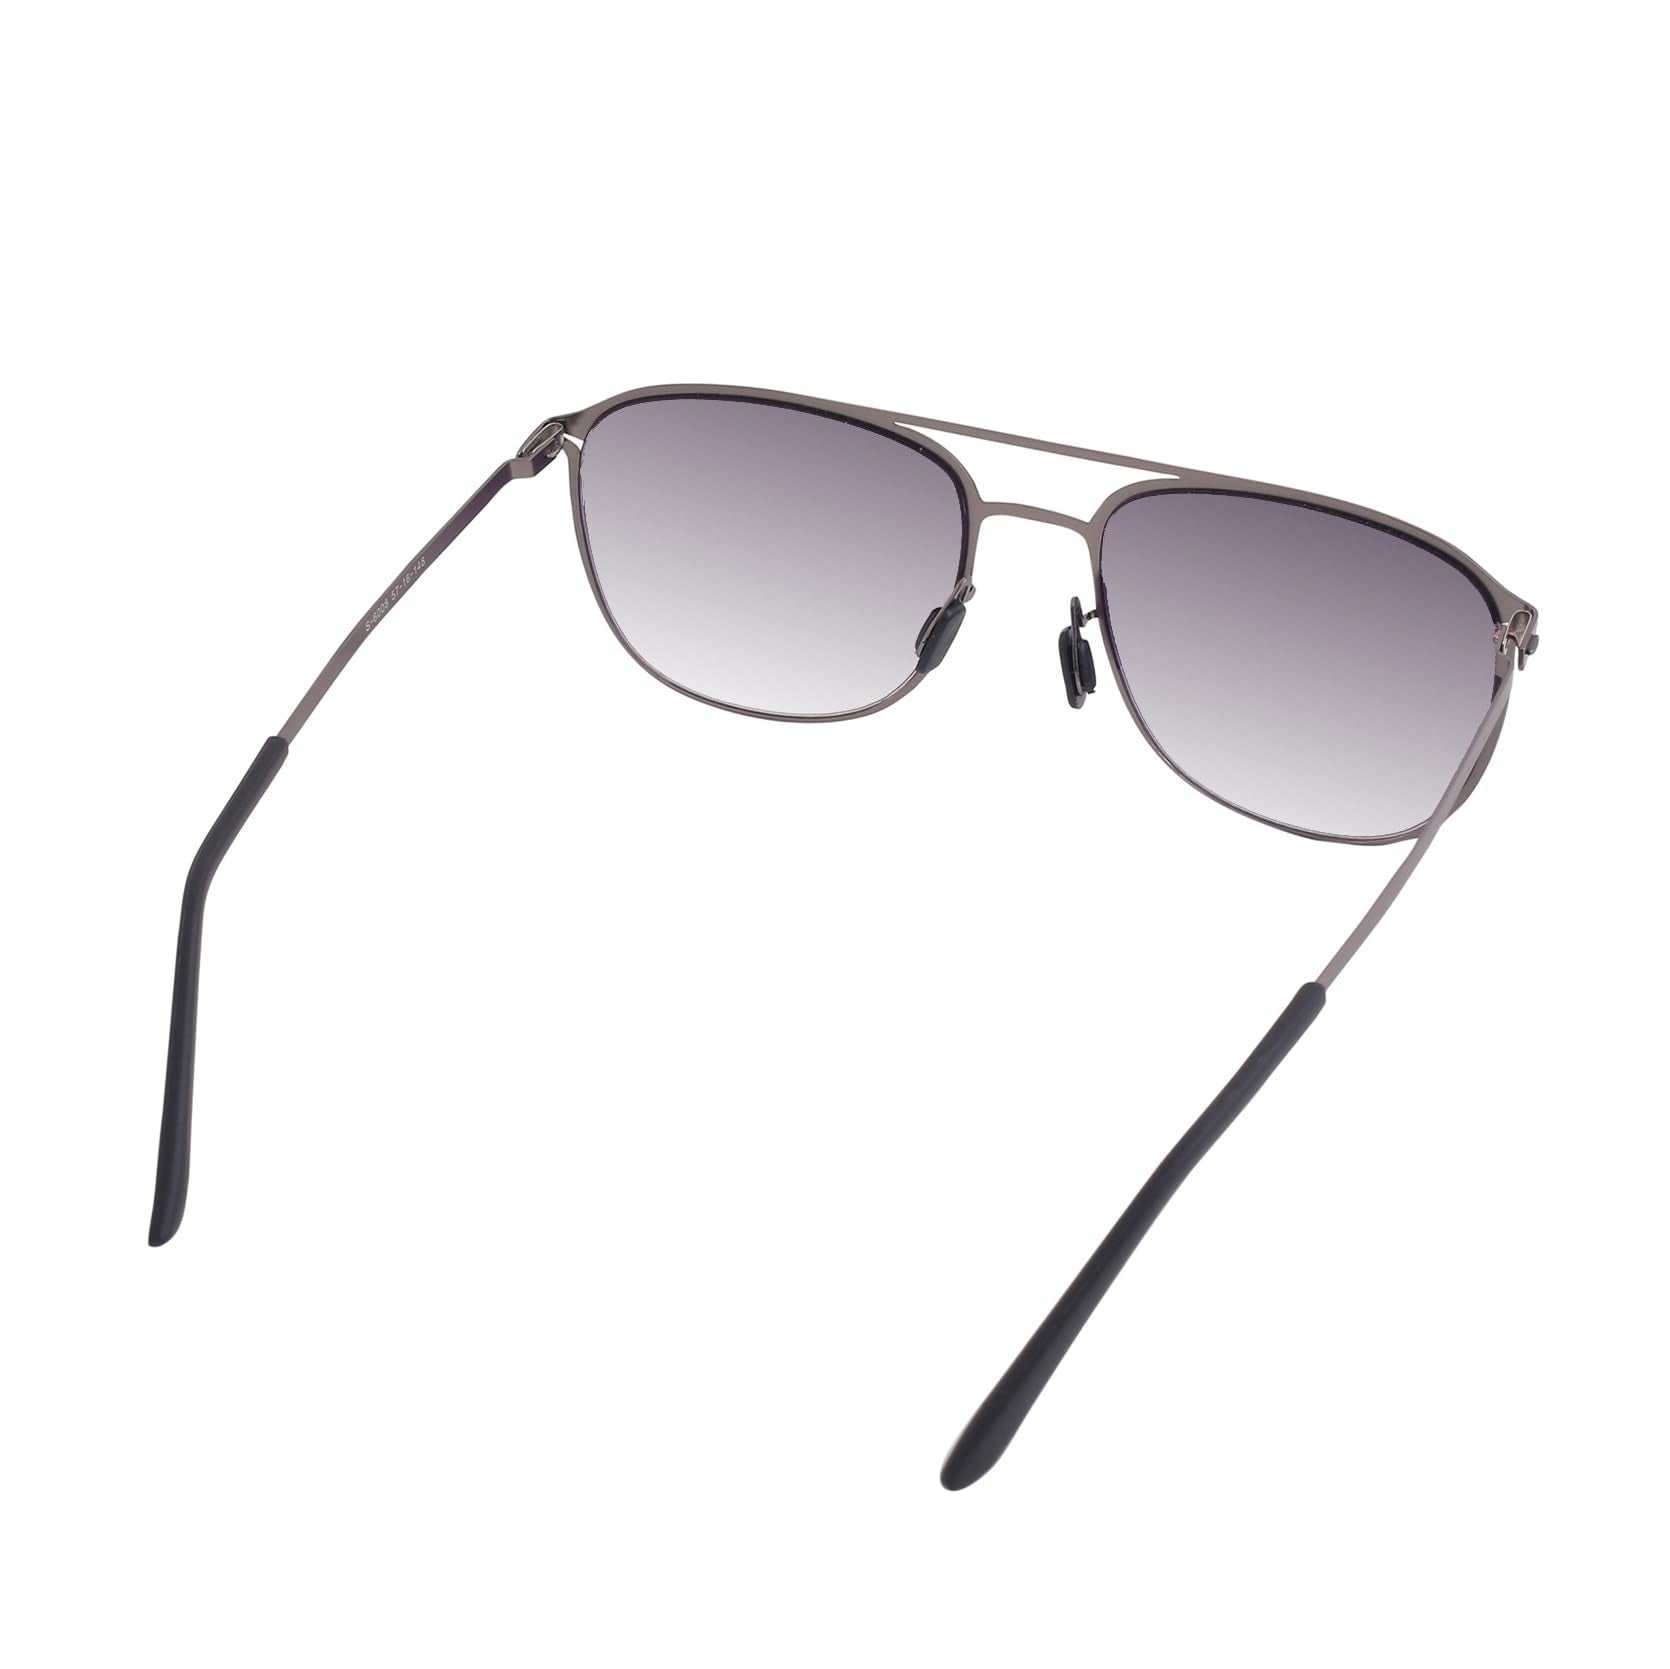 Paw Patrol Girls Sunglasses UV protection for Holiday - Choose Design | eBay